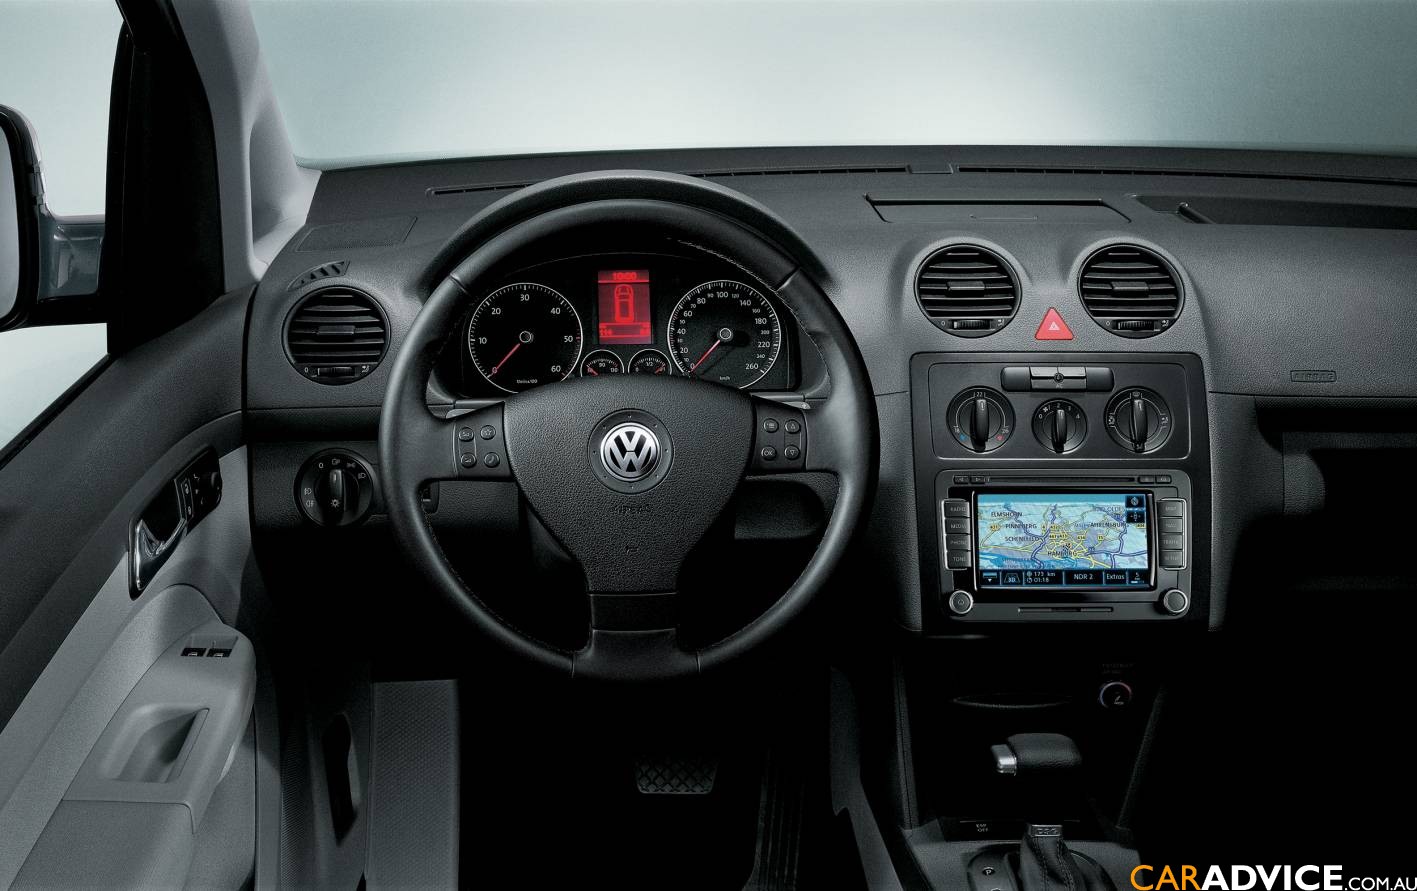 Volkswagen Caddy Maxi Tdi Picture 6 Reviews News Specs